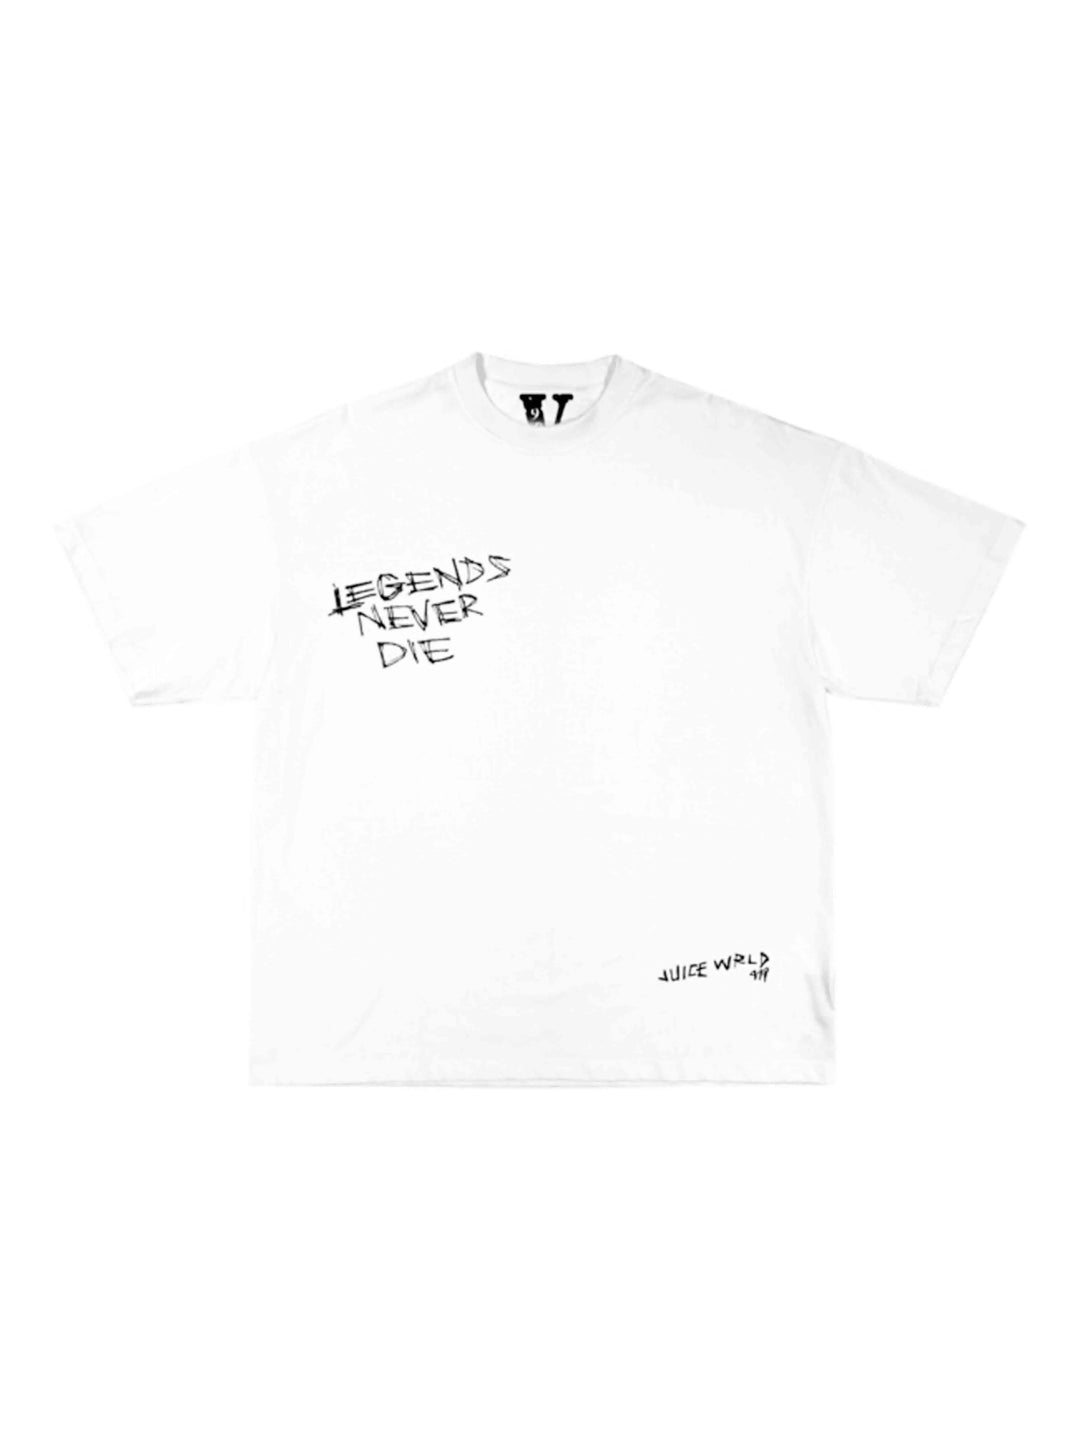 Juice Wrld x Vlone Legends Never Die T-Shirt White [SS20] Prior